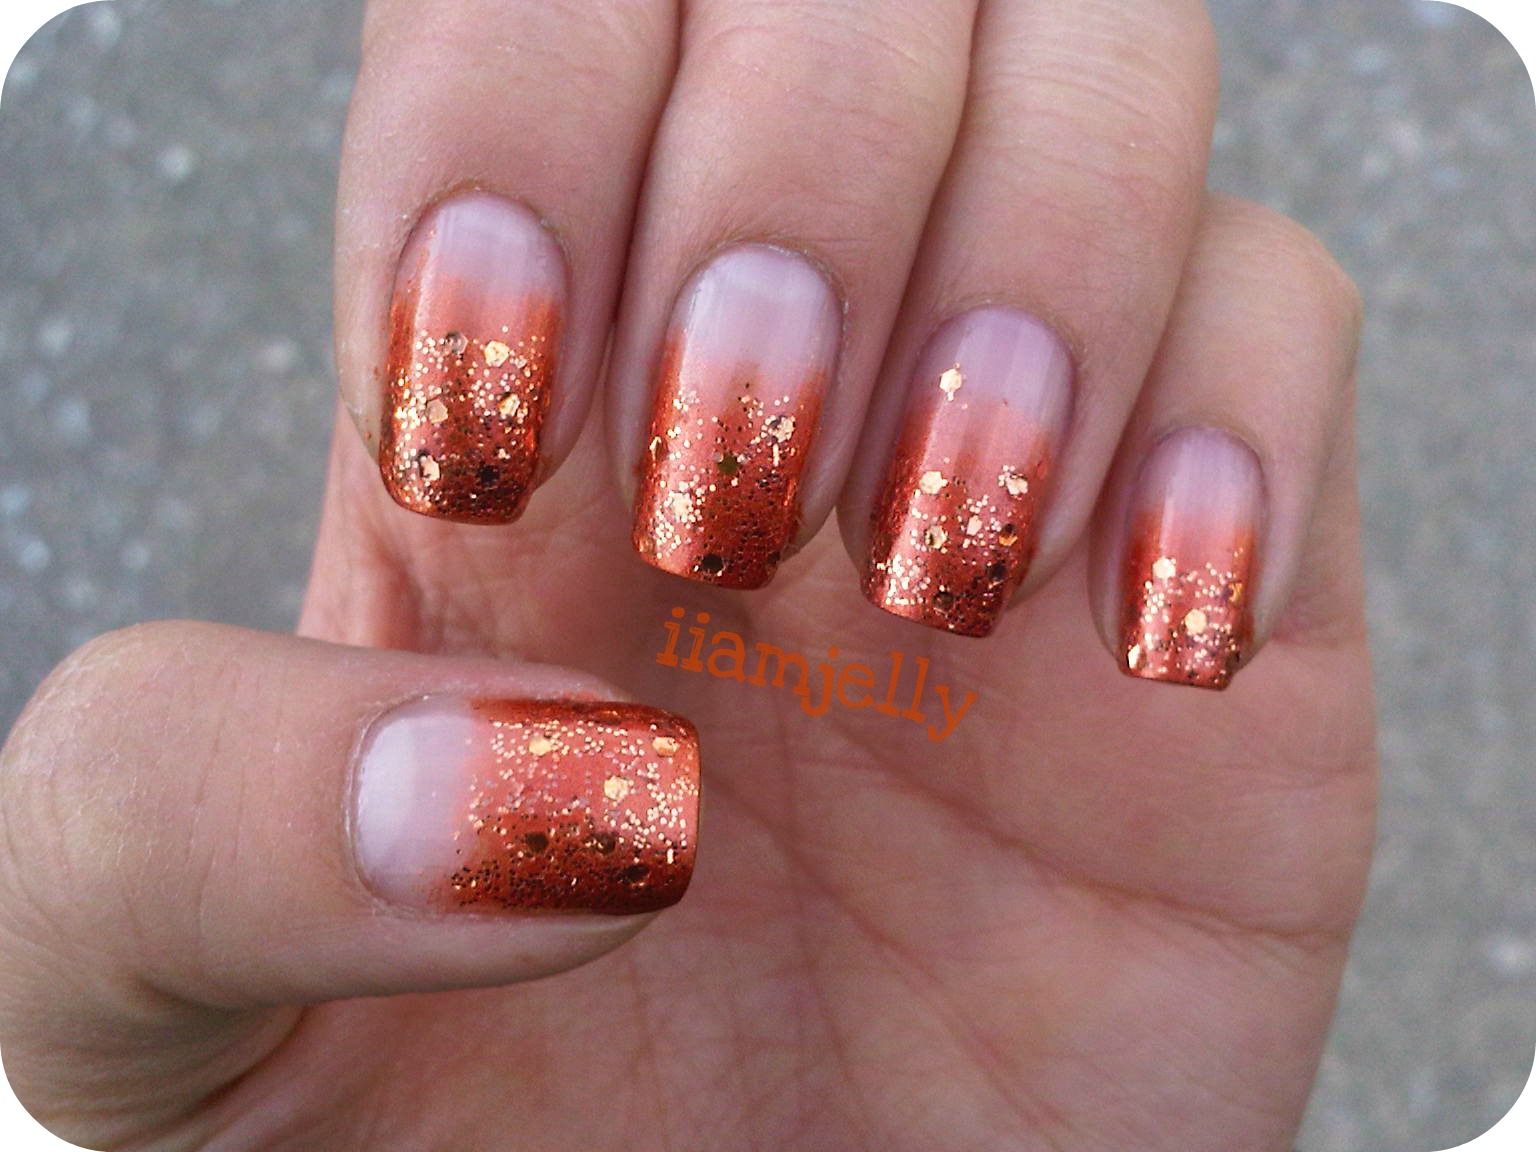 1. Glitter Gradient Nails - wide 3